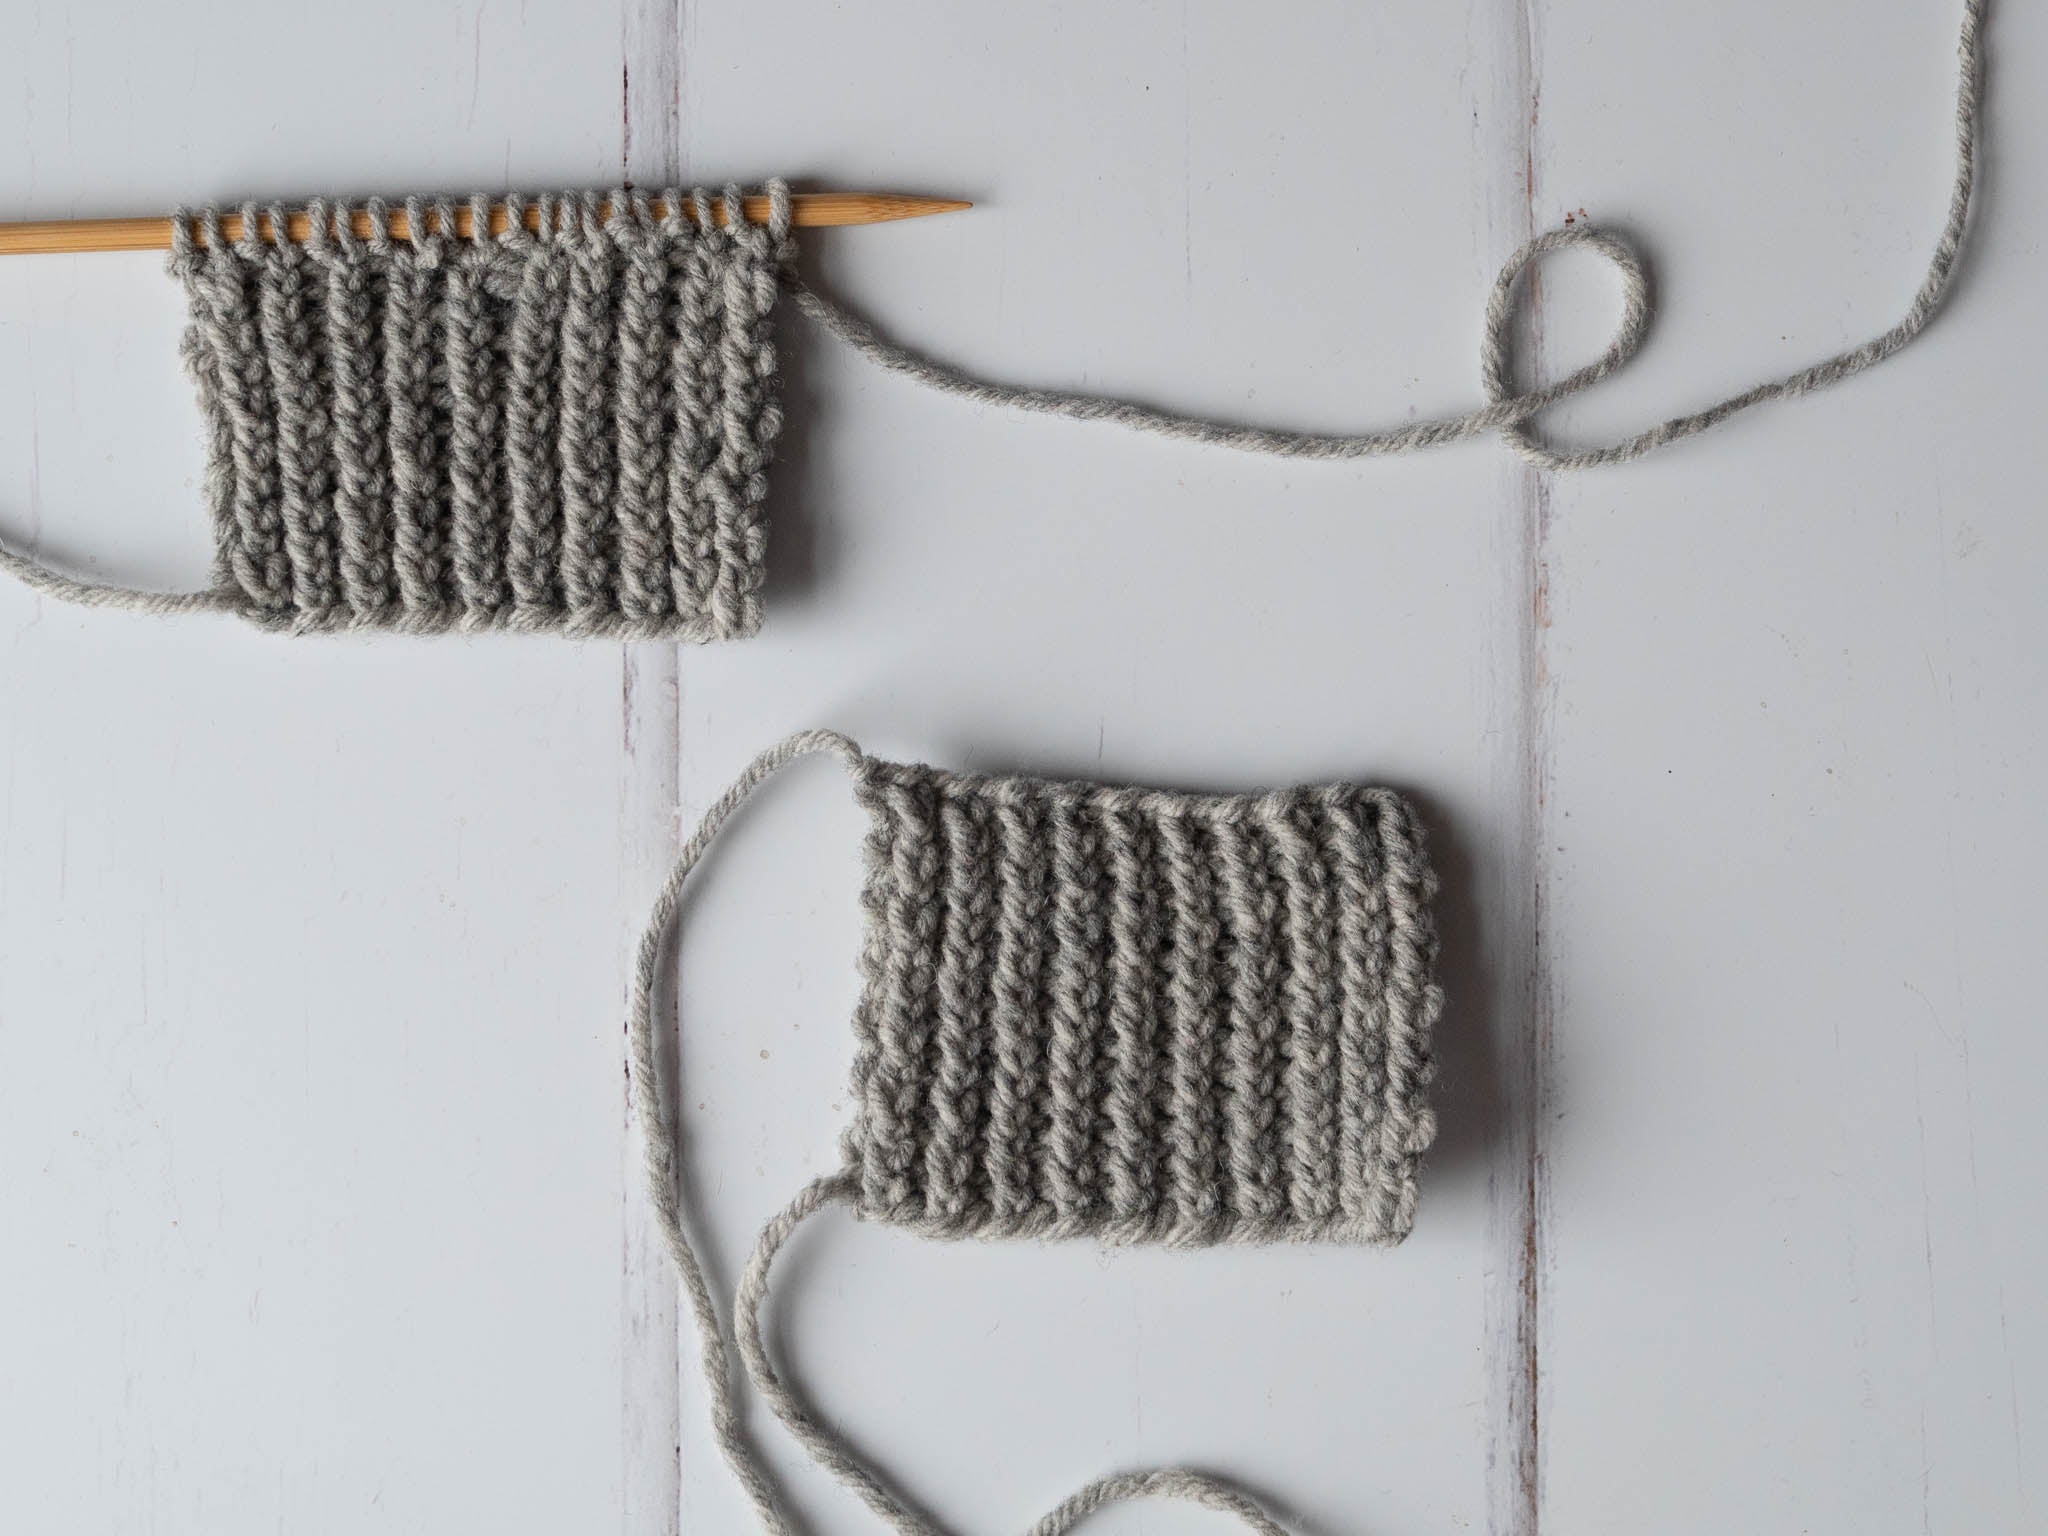 Chevron Rib Stitch Knitting Pattern for Beginners - Studio Knit